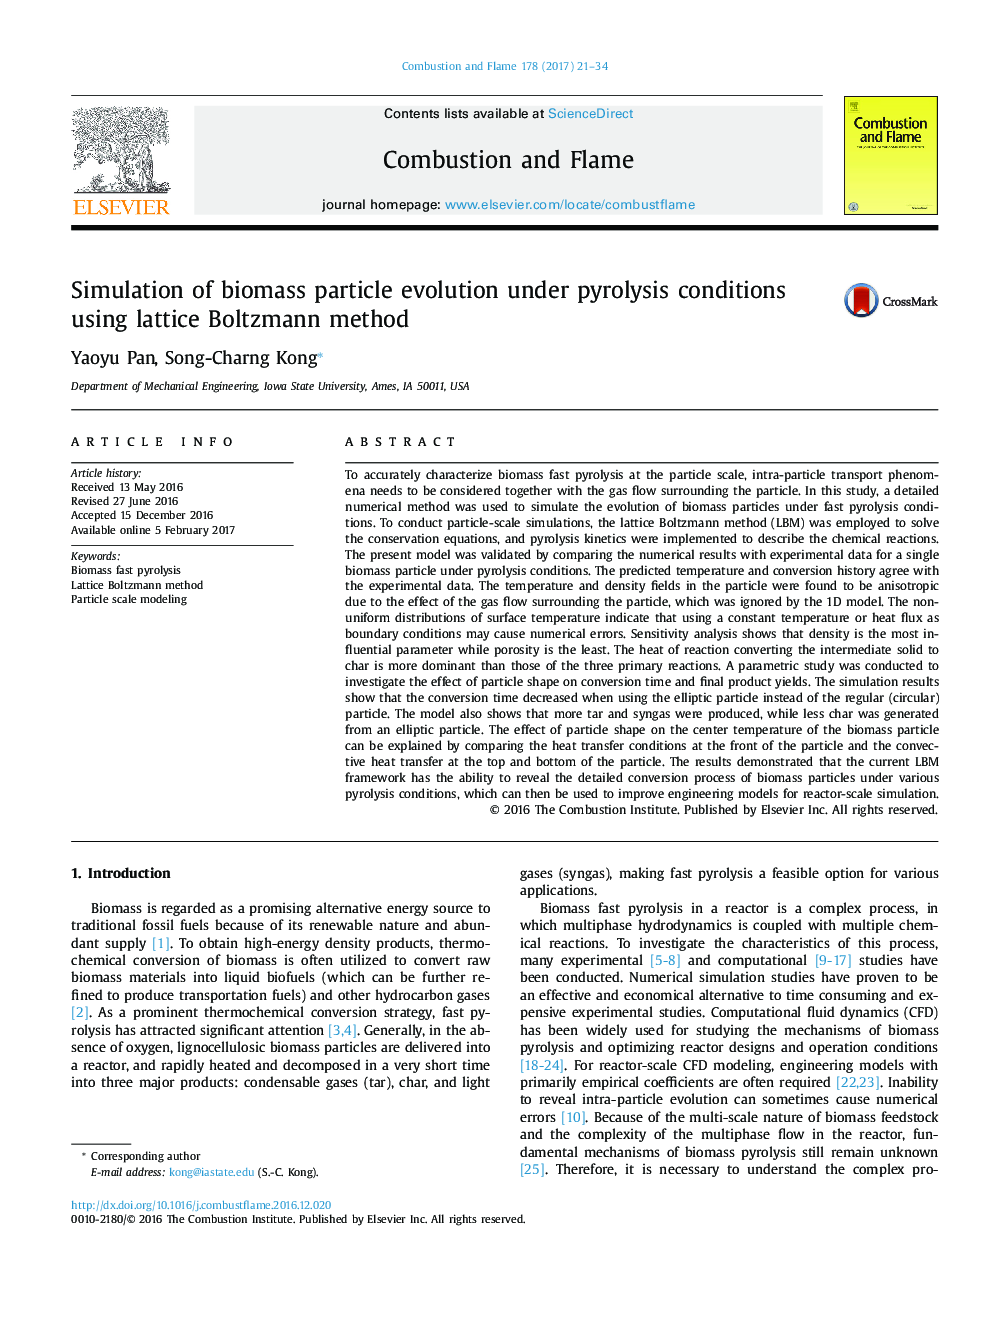 Simulation of biomass particle evolution under pyrolysis conditions using lattice Boltzmann method